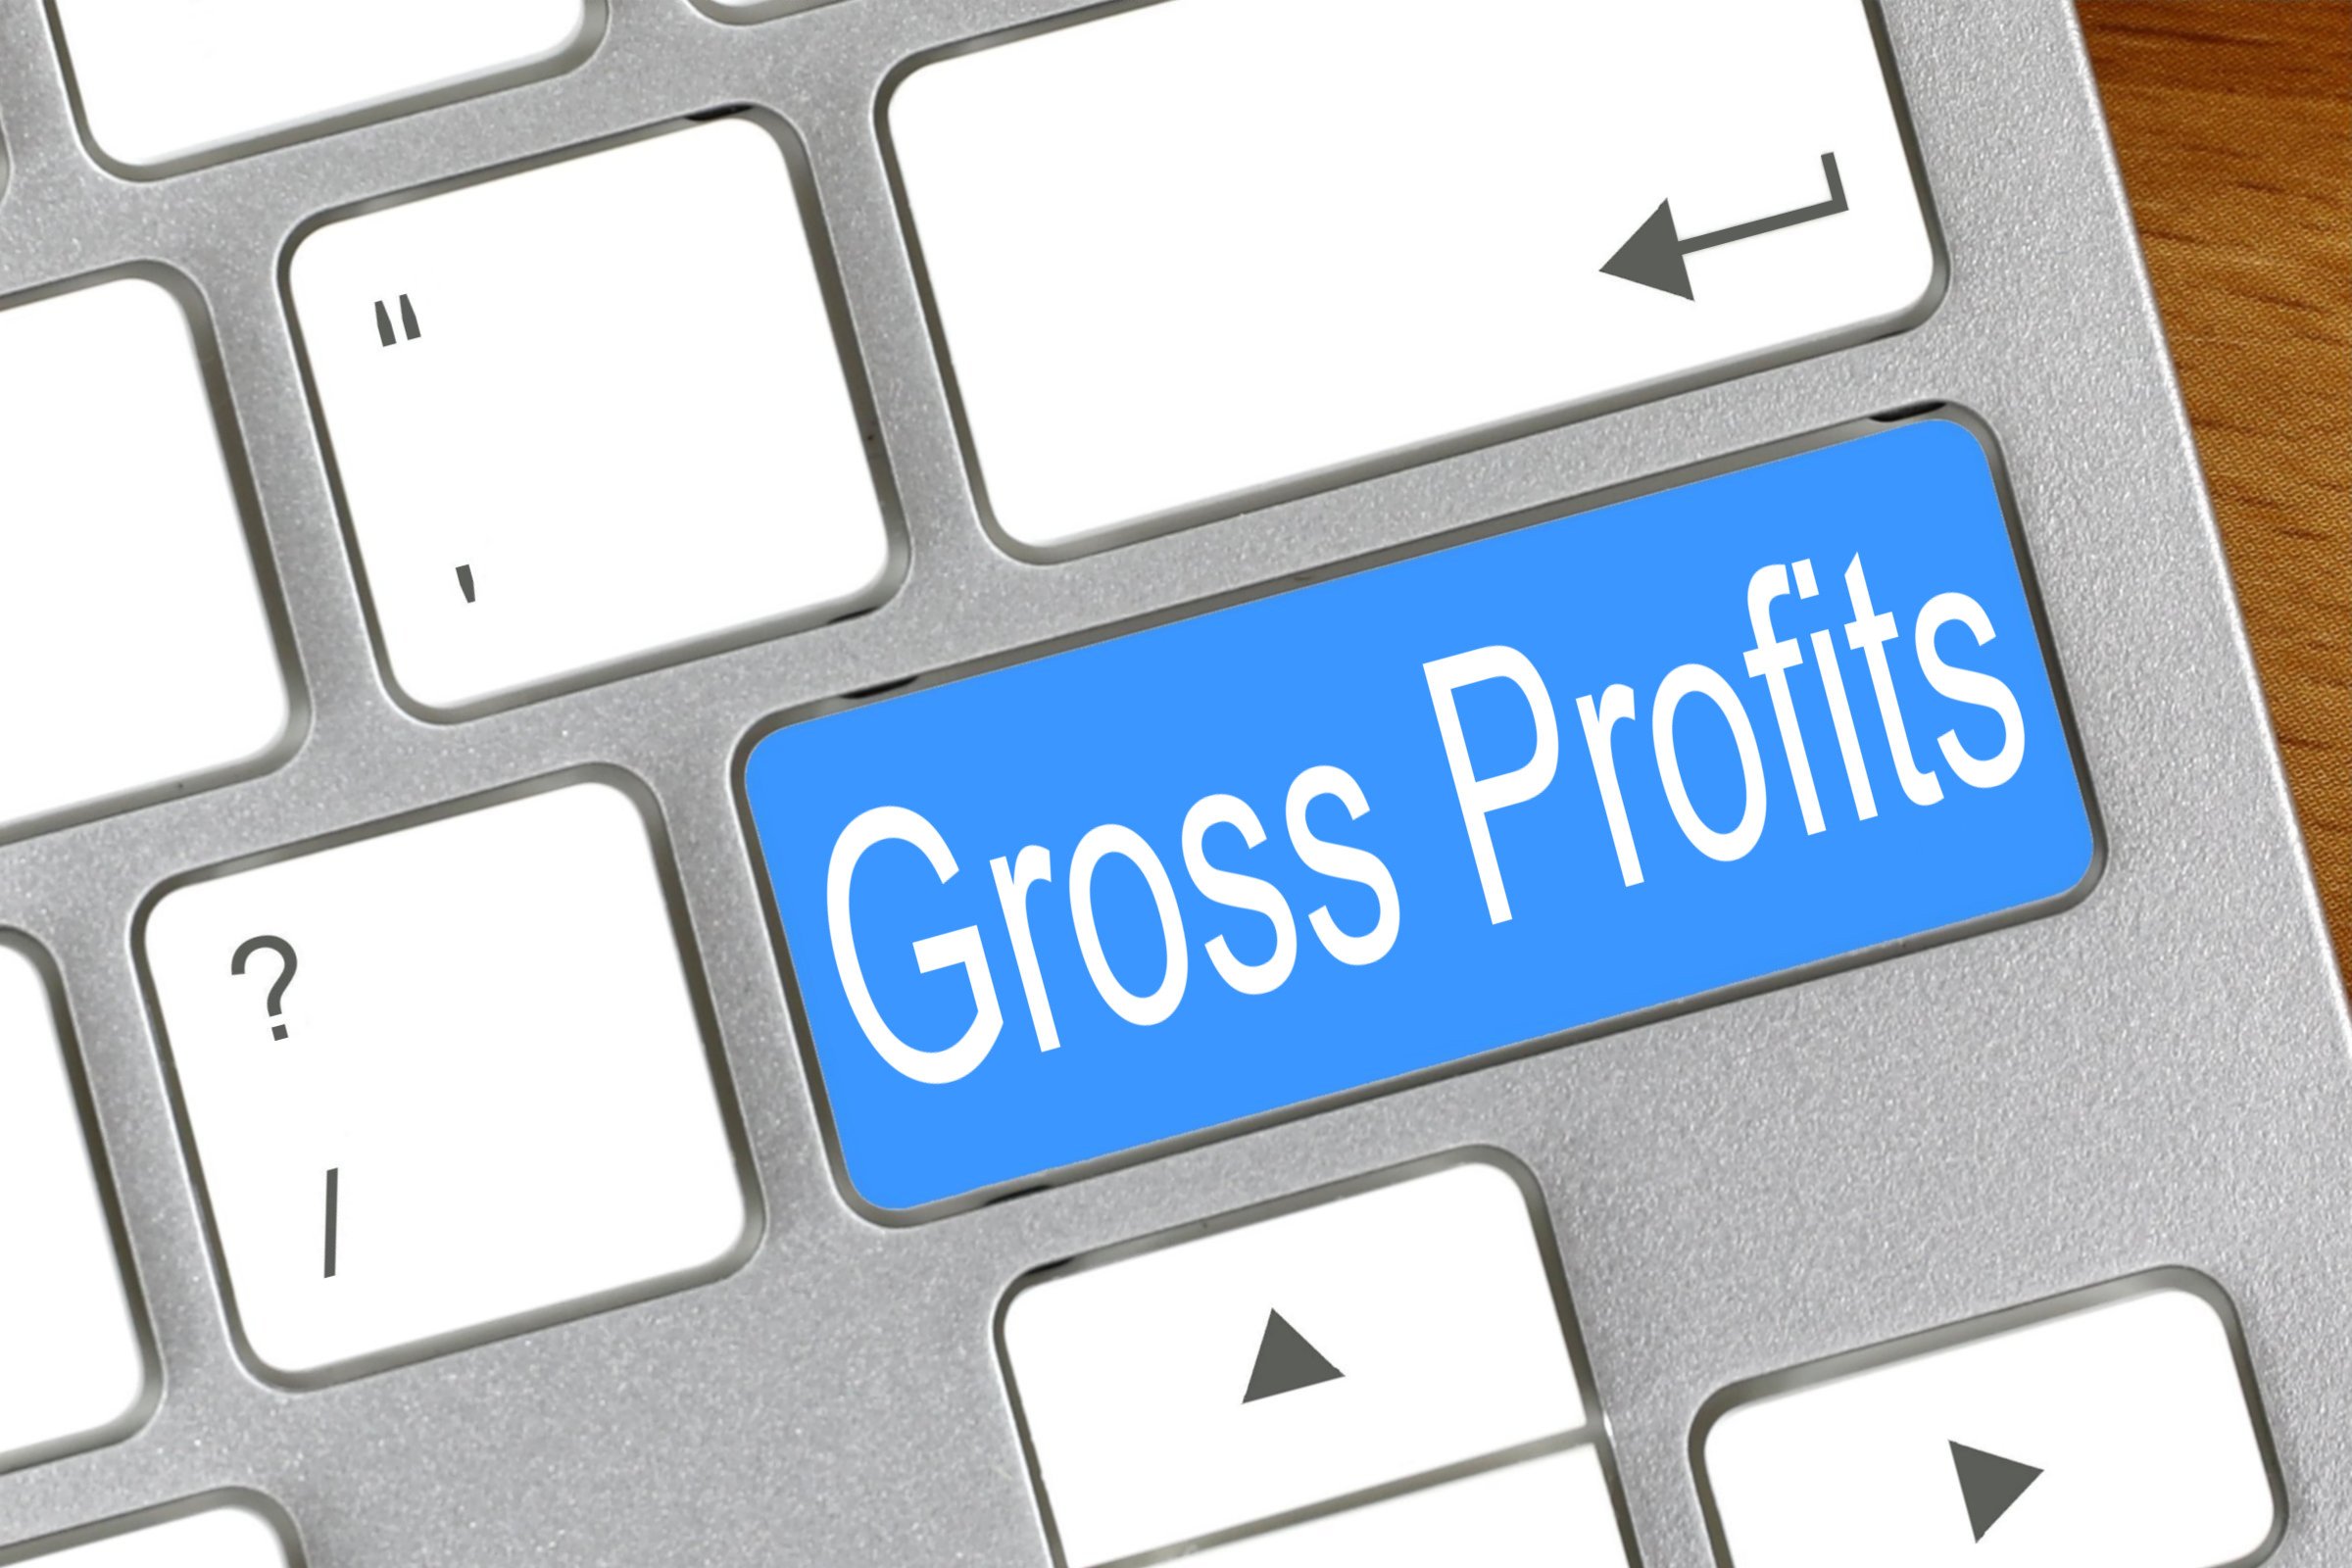 gross profits